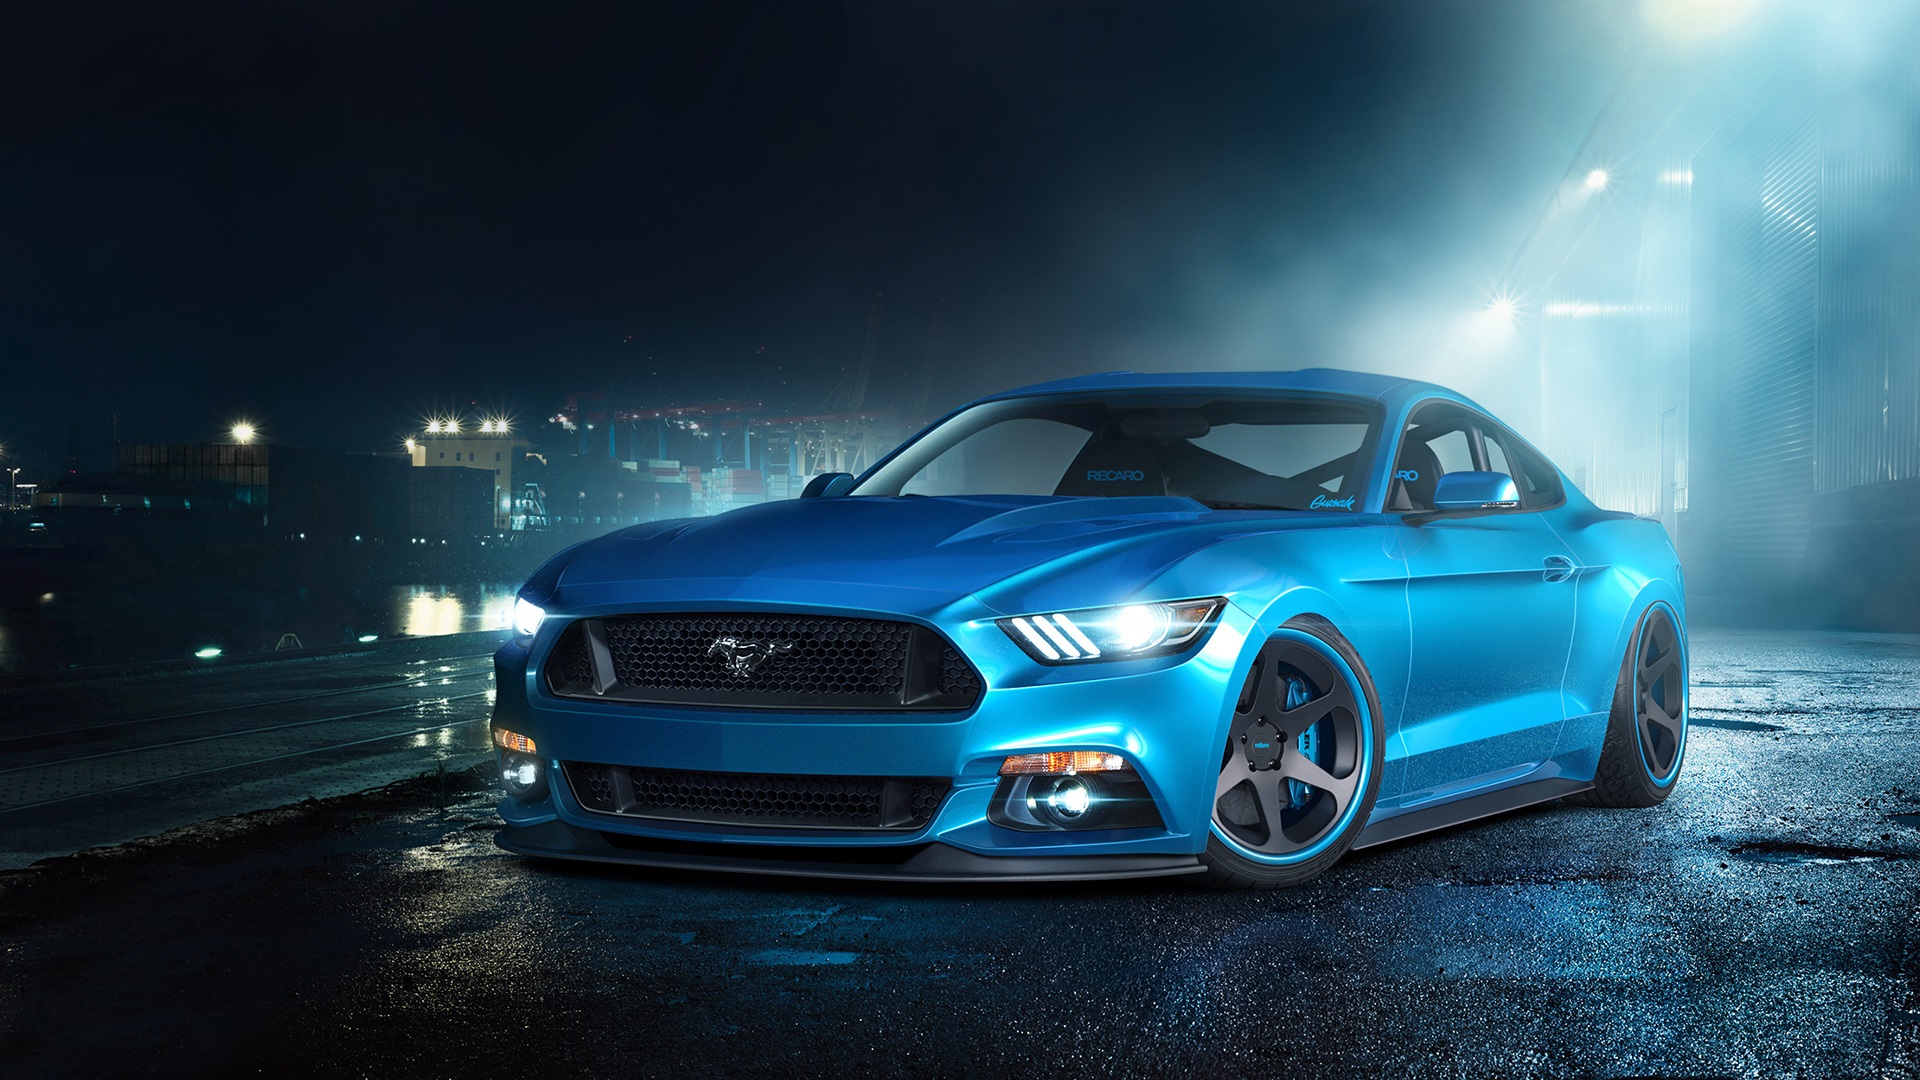 Ford Mustang Gt Blue Supercar Wallpaper Cars Wallpaper Better